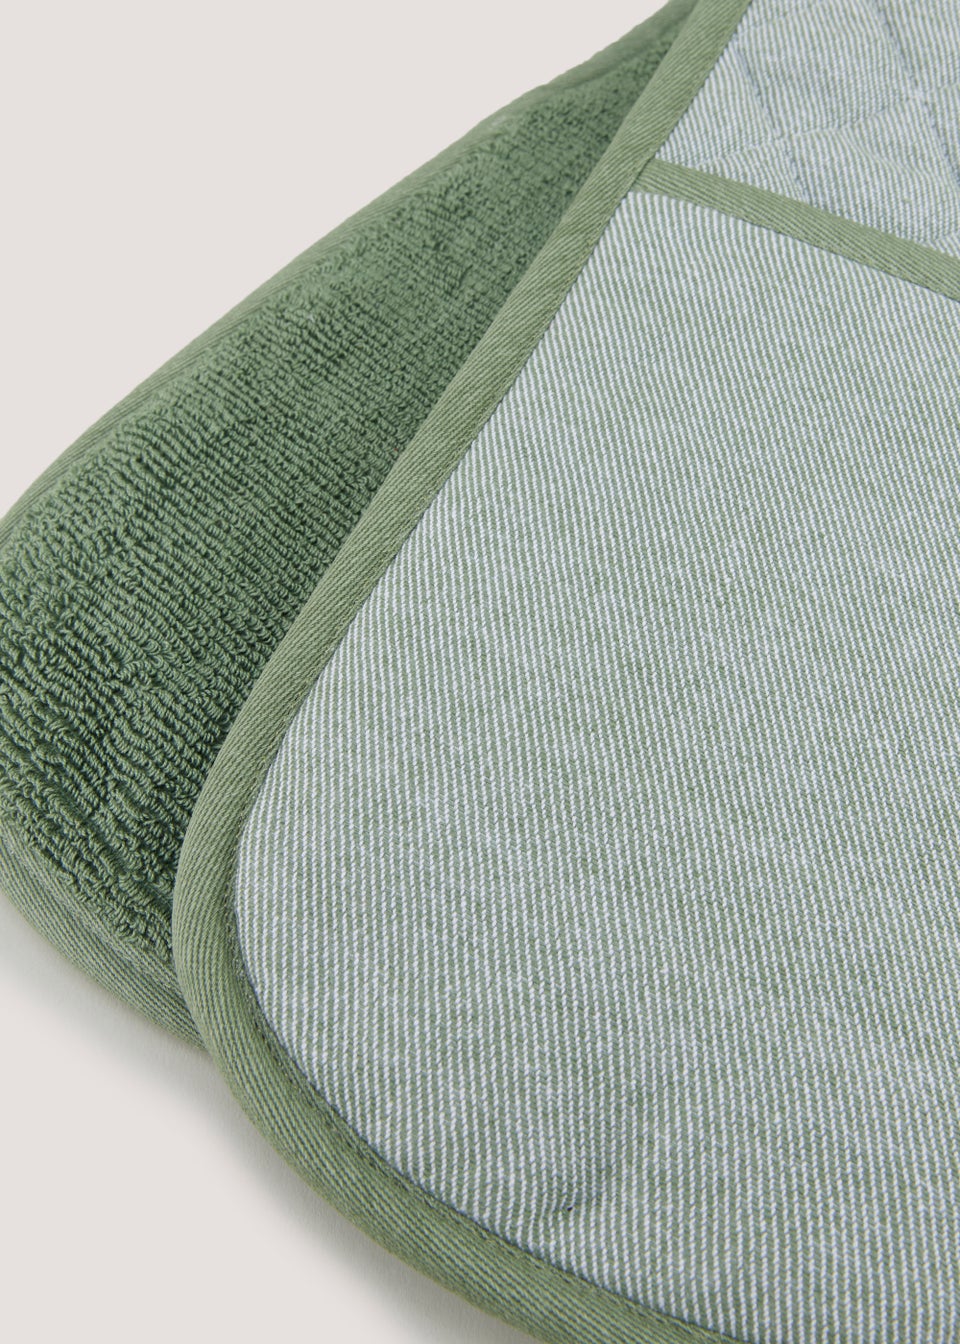 Green Pro Textiles Oven Gloves (91.5cm x 19cm)